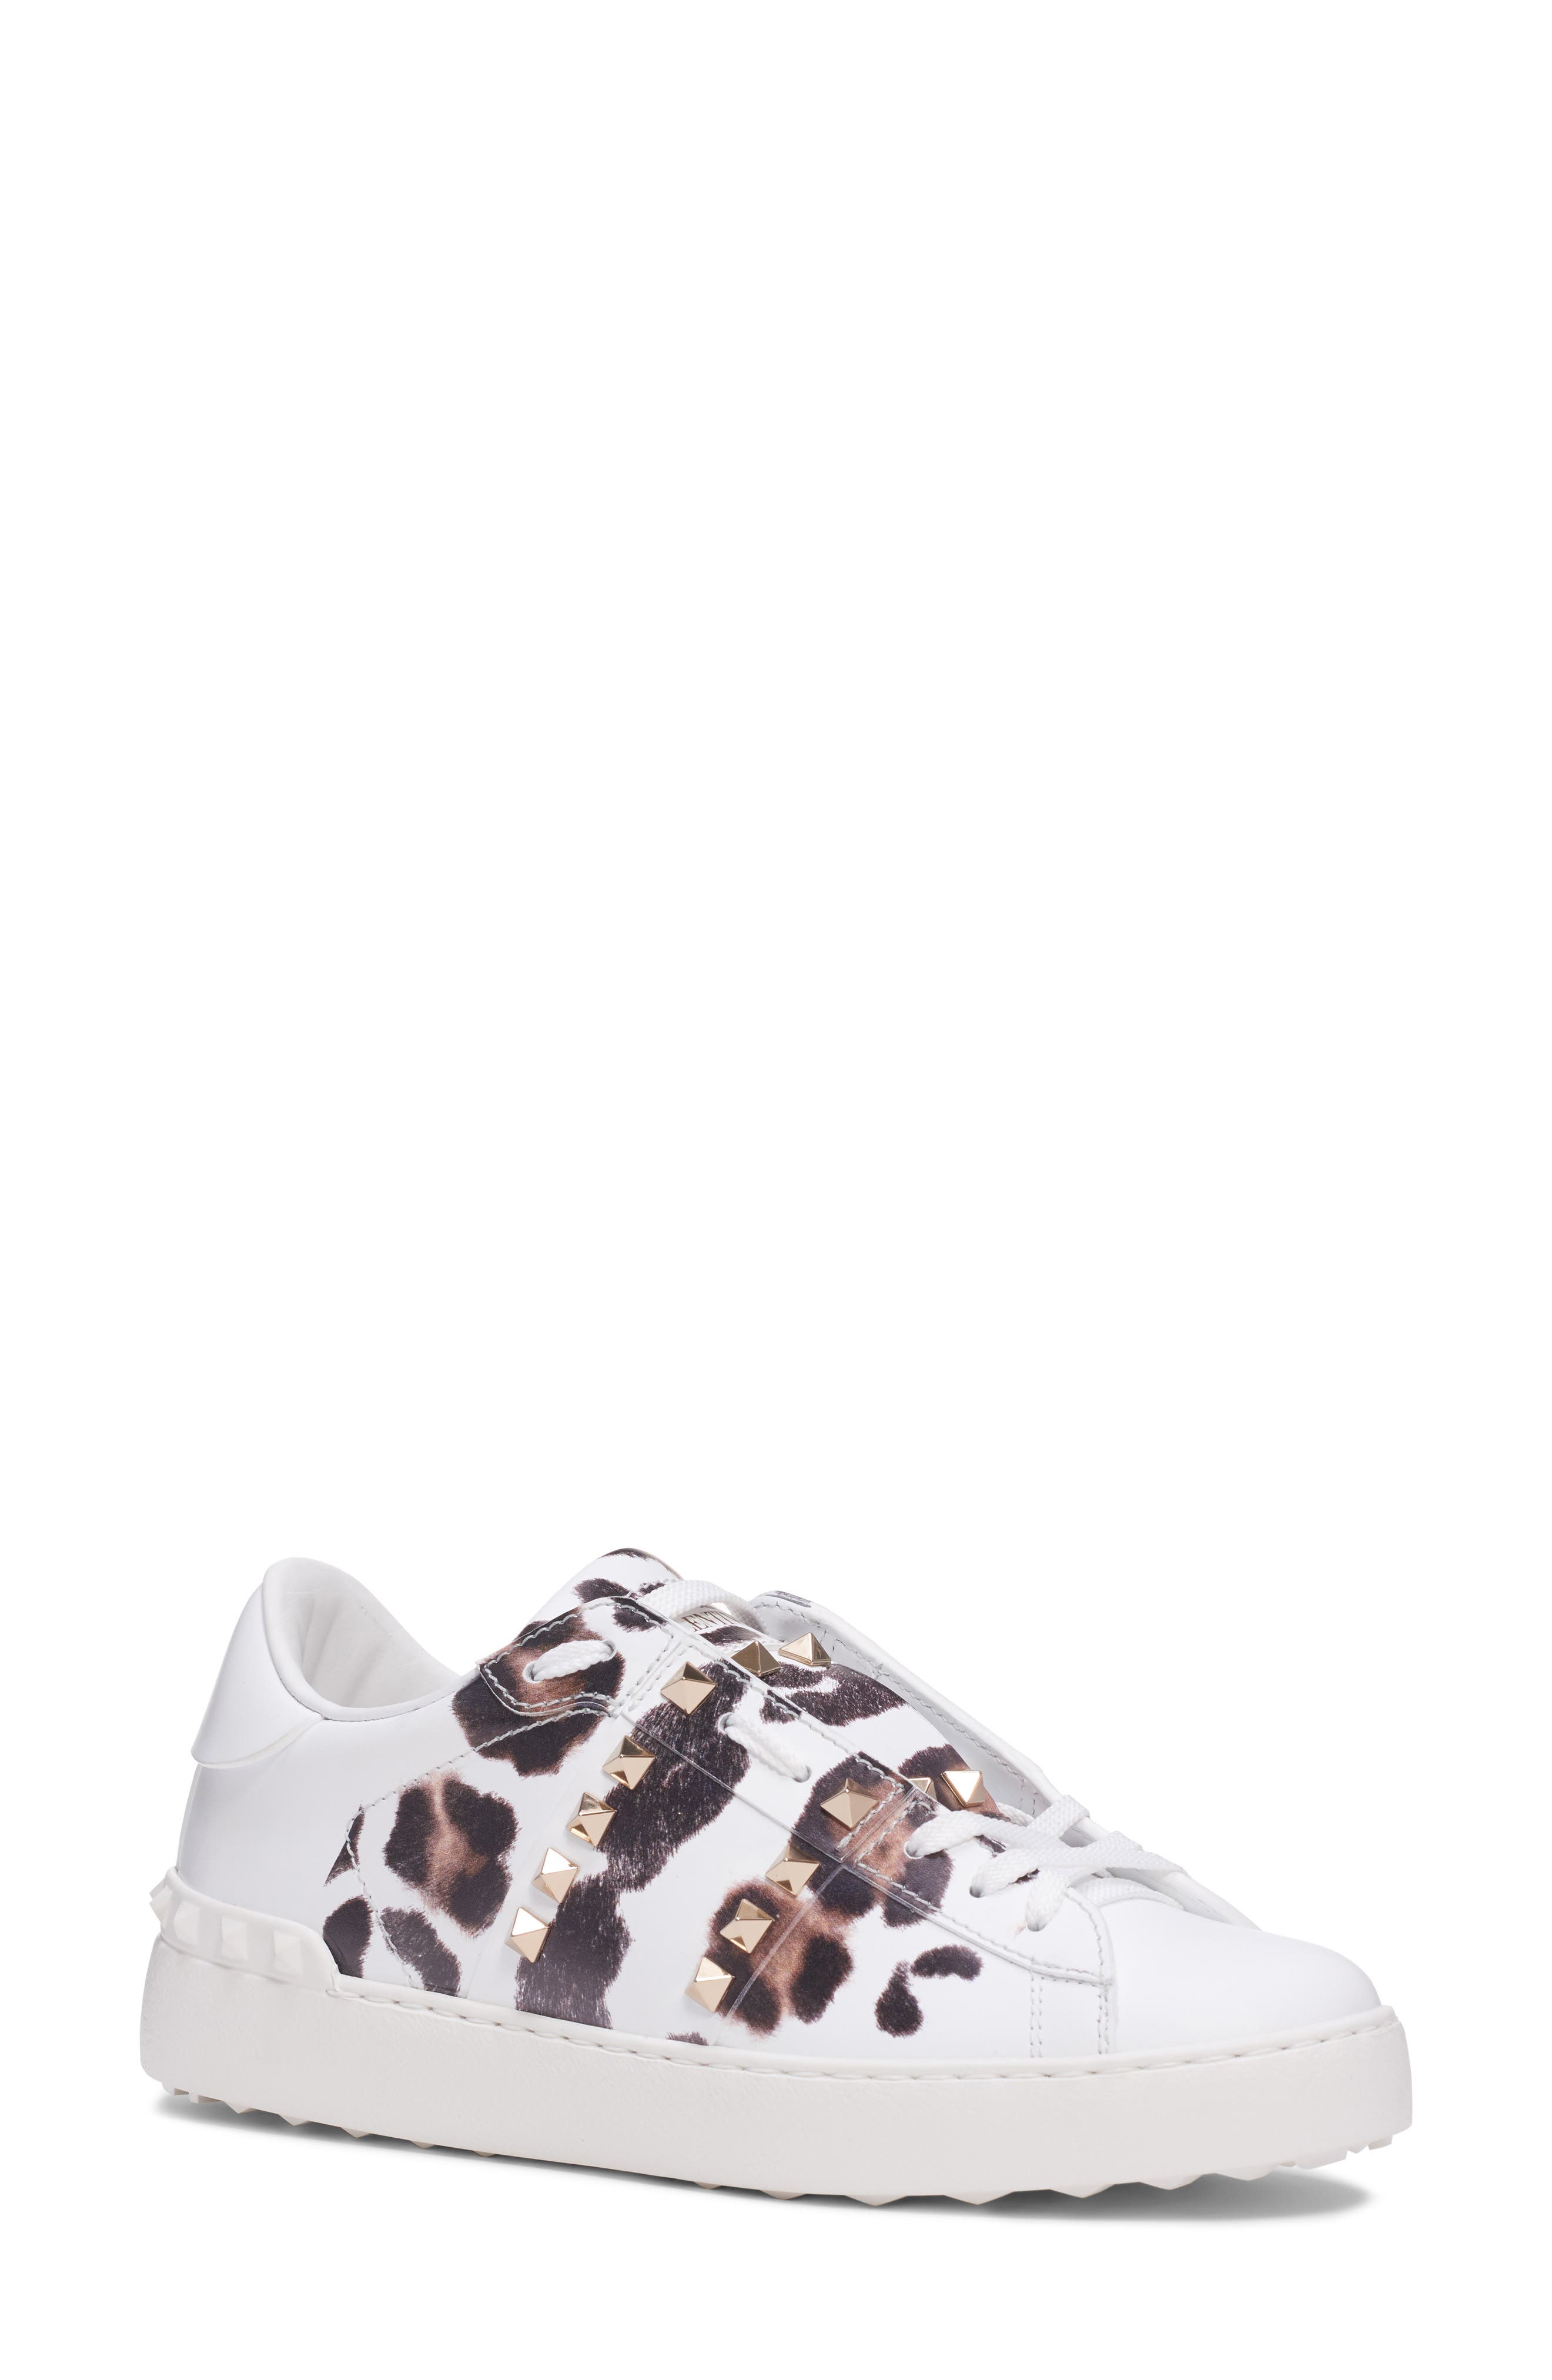 valentino leopard sneakers